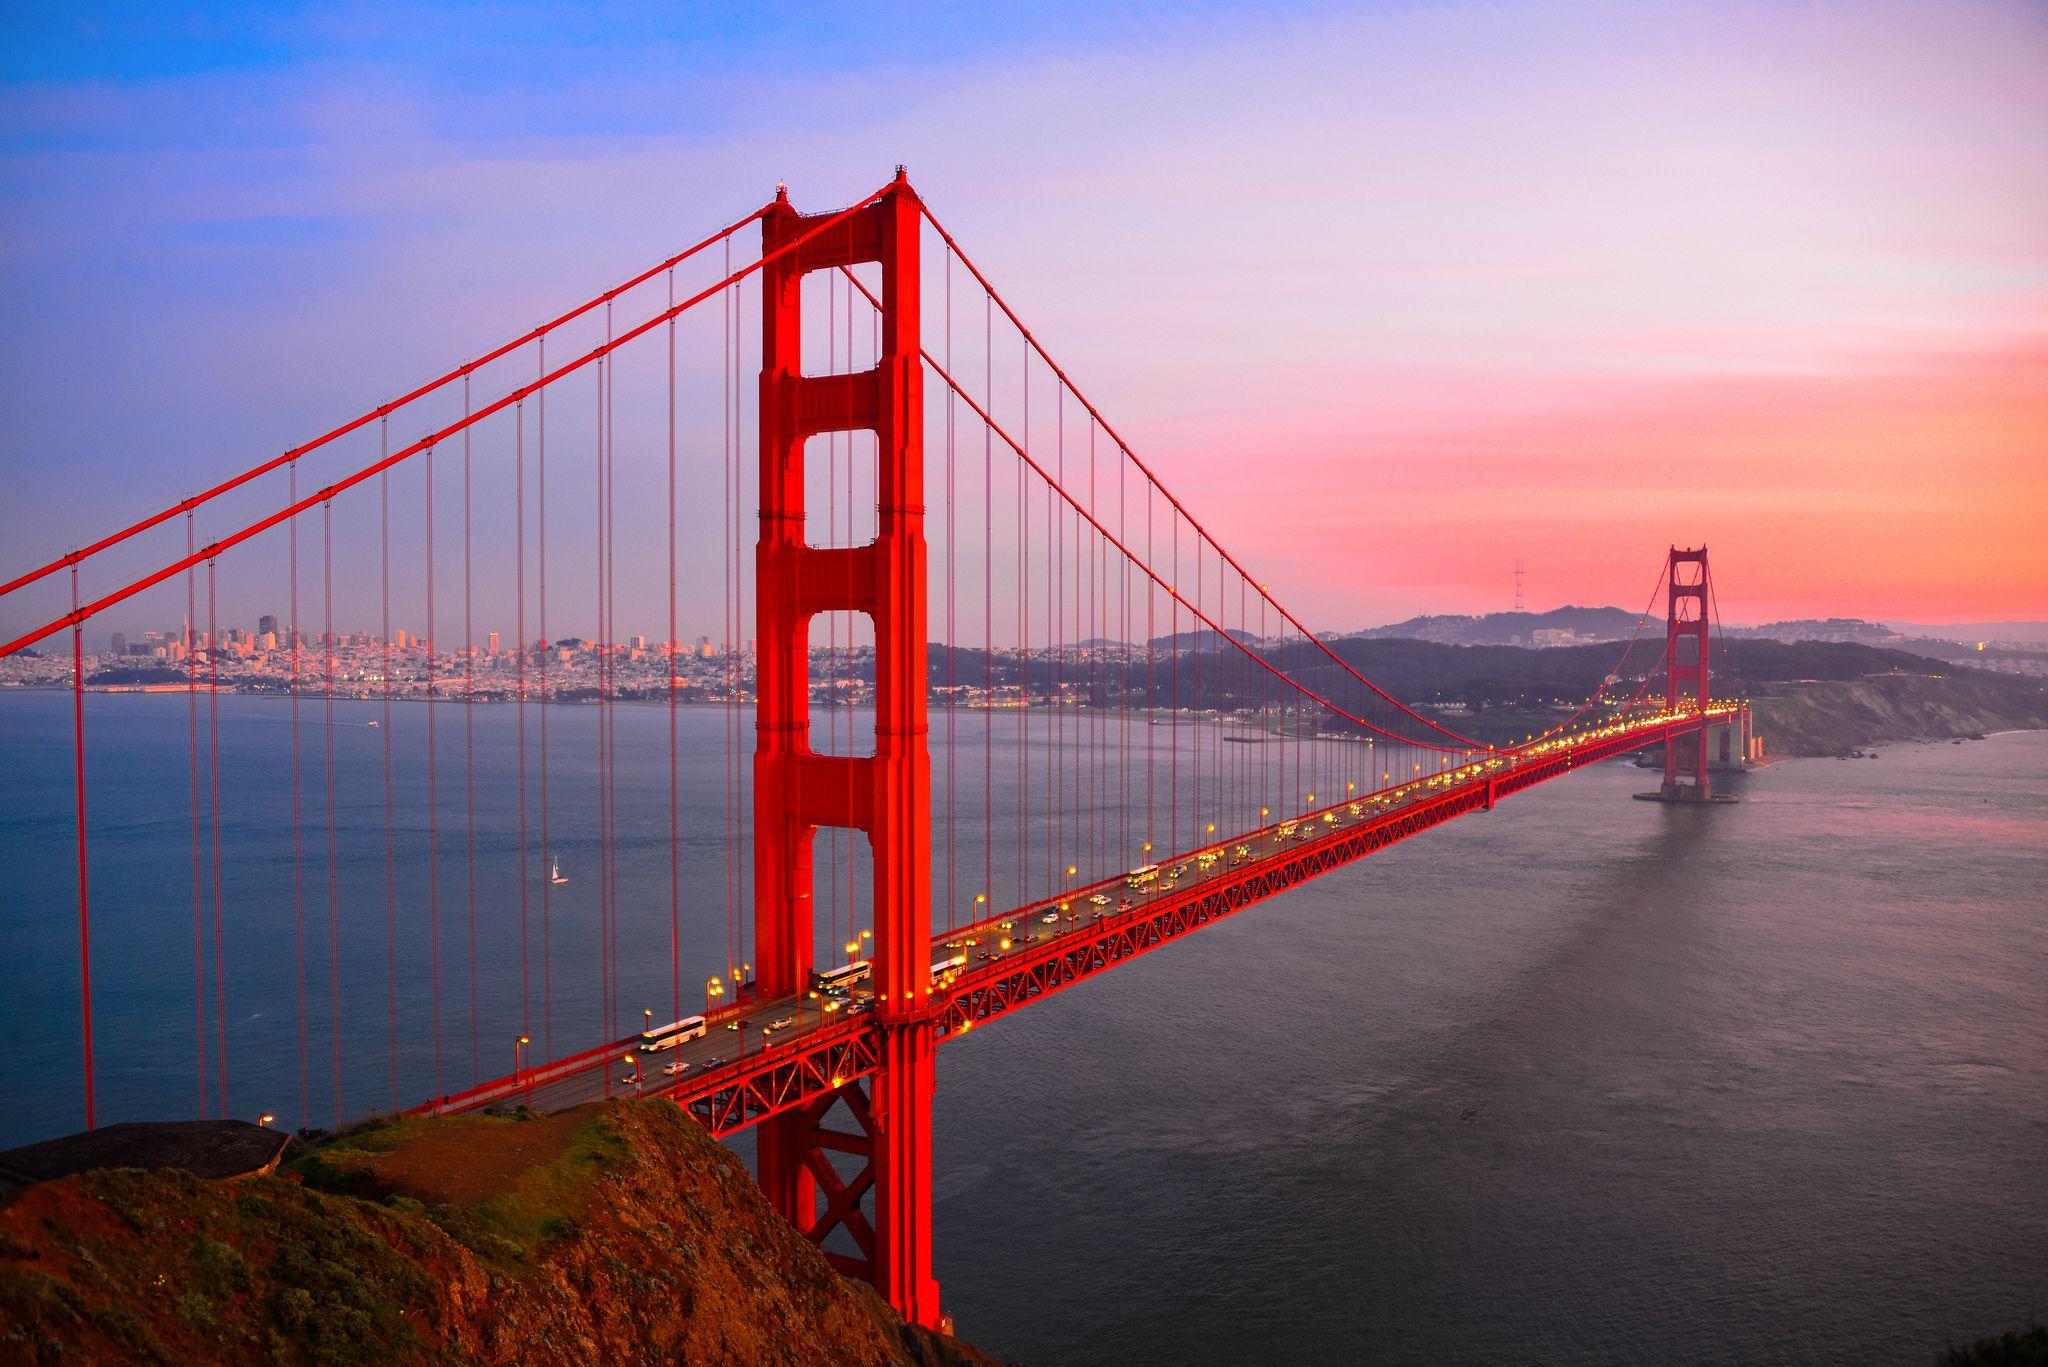 Golden Gate Bridge Blue Night Suspension Bridge In San Francisco California  United States 4k Ultra Hd Wallpaper For Desktop And Mobile Phones :  Wallpapers13.com